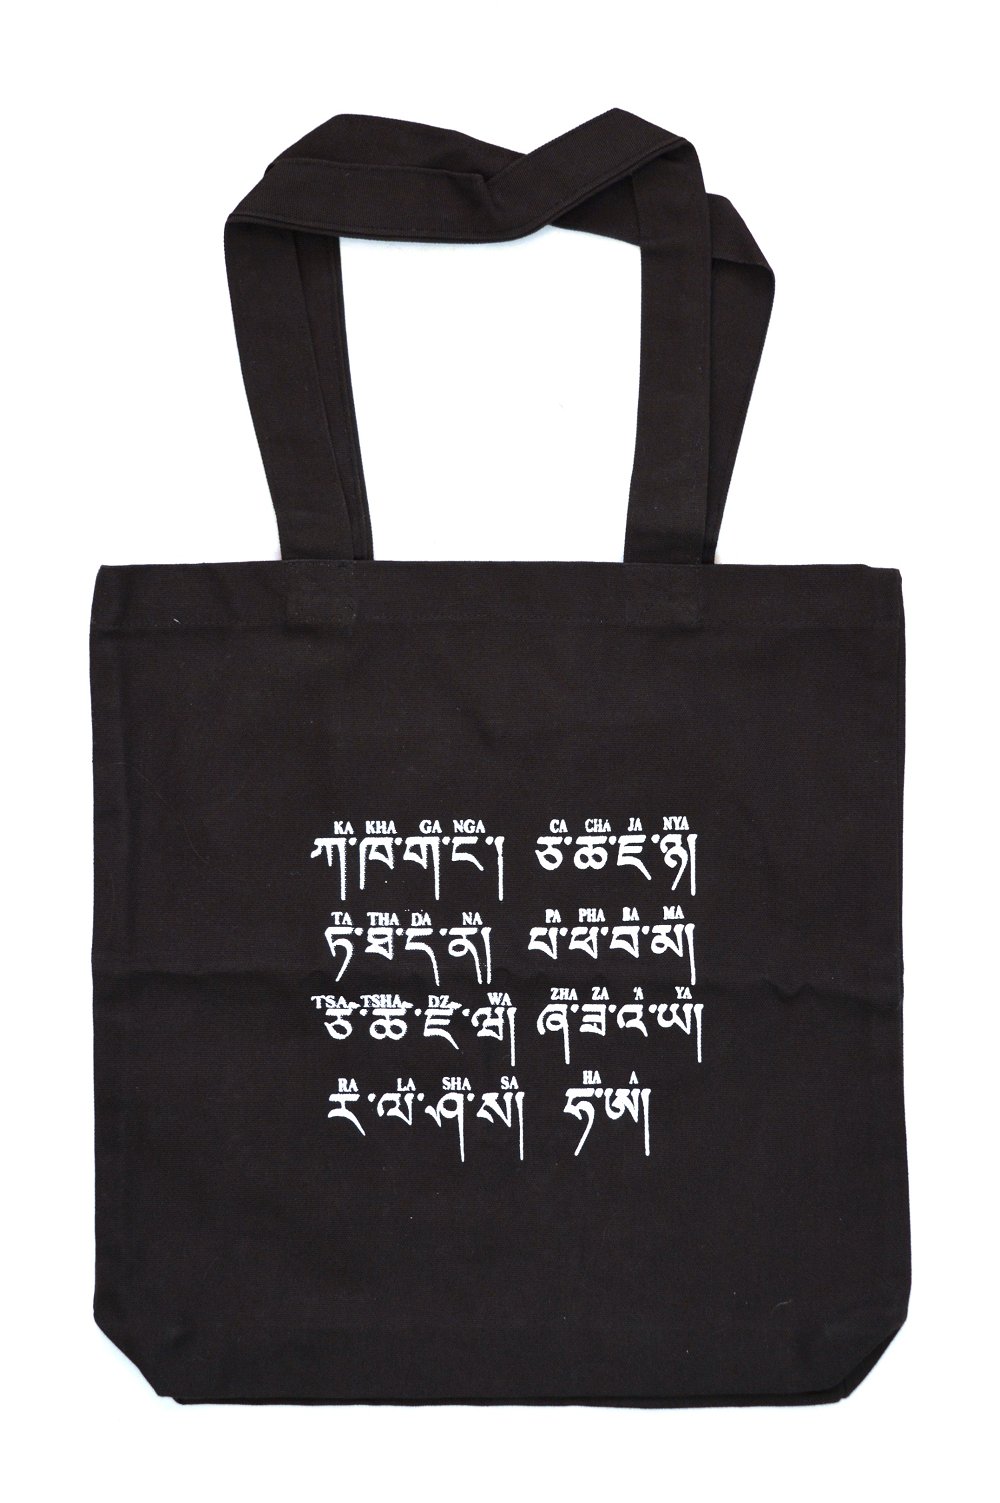 Сумка-шоппер на плечо с тибетским алфавитом, 38 х 38 см, 38 х 38 см, Тибетский алфавит